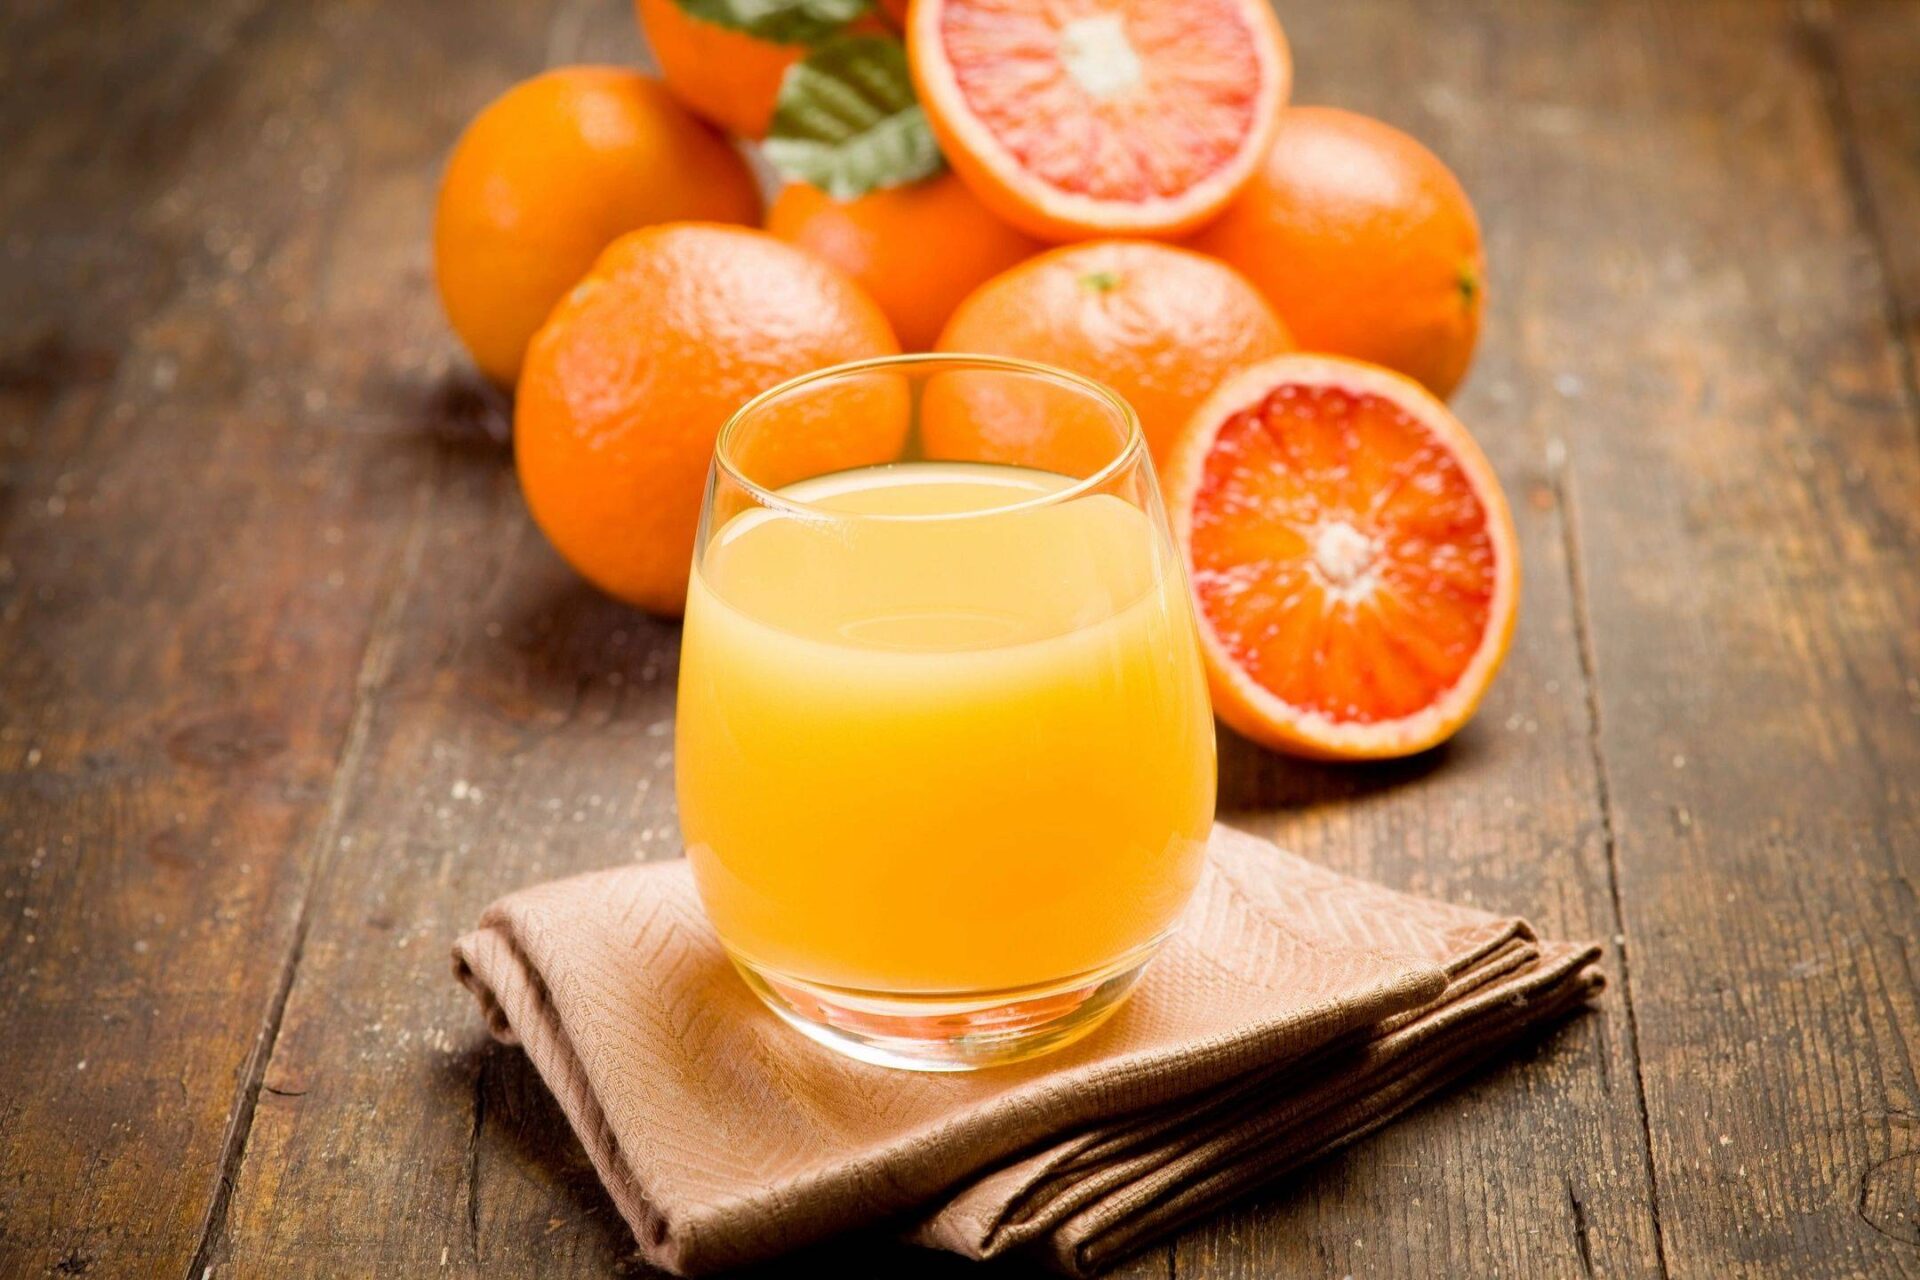 a glass of orange juice and oranges